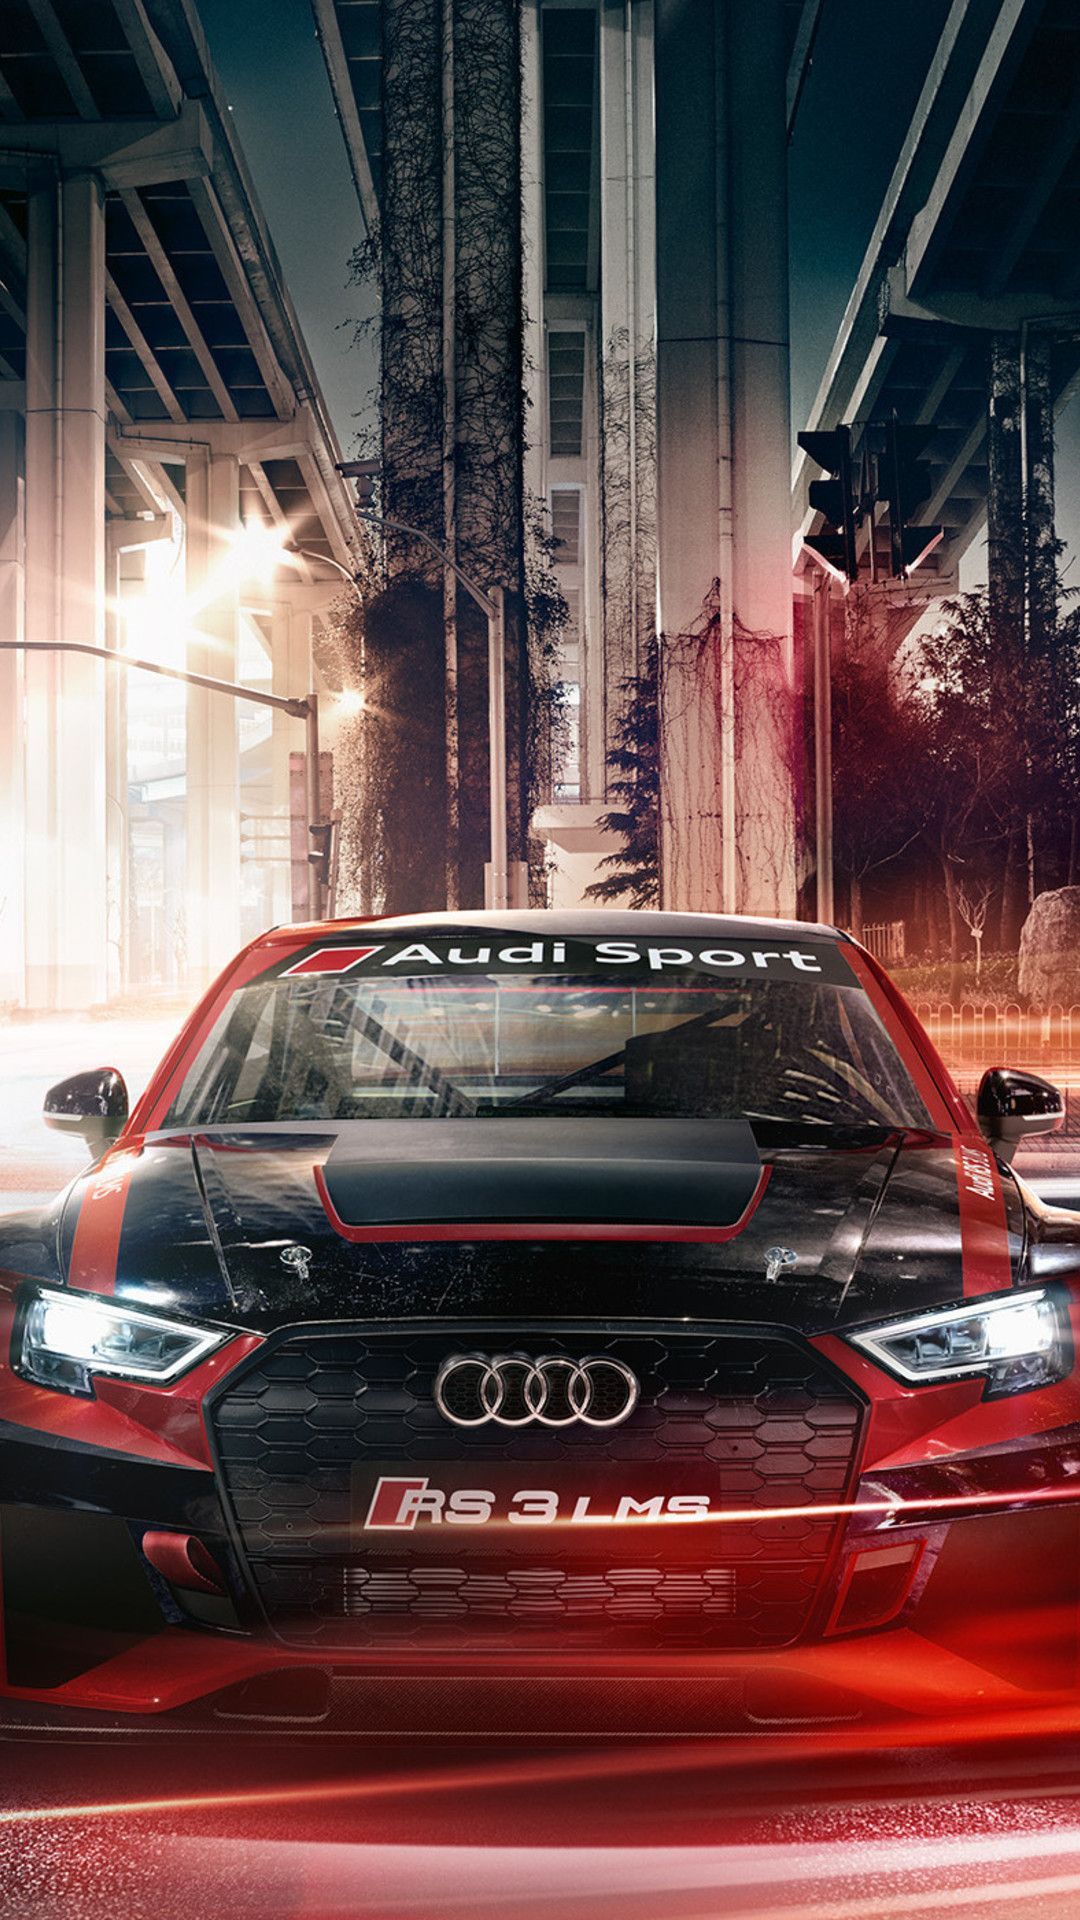 Audi Hintergrundbild 1080x1920. Audi Rs 3 In 1080x1920 Resolution. Audi rs, Audi rs Dream cars audi